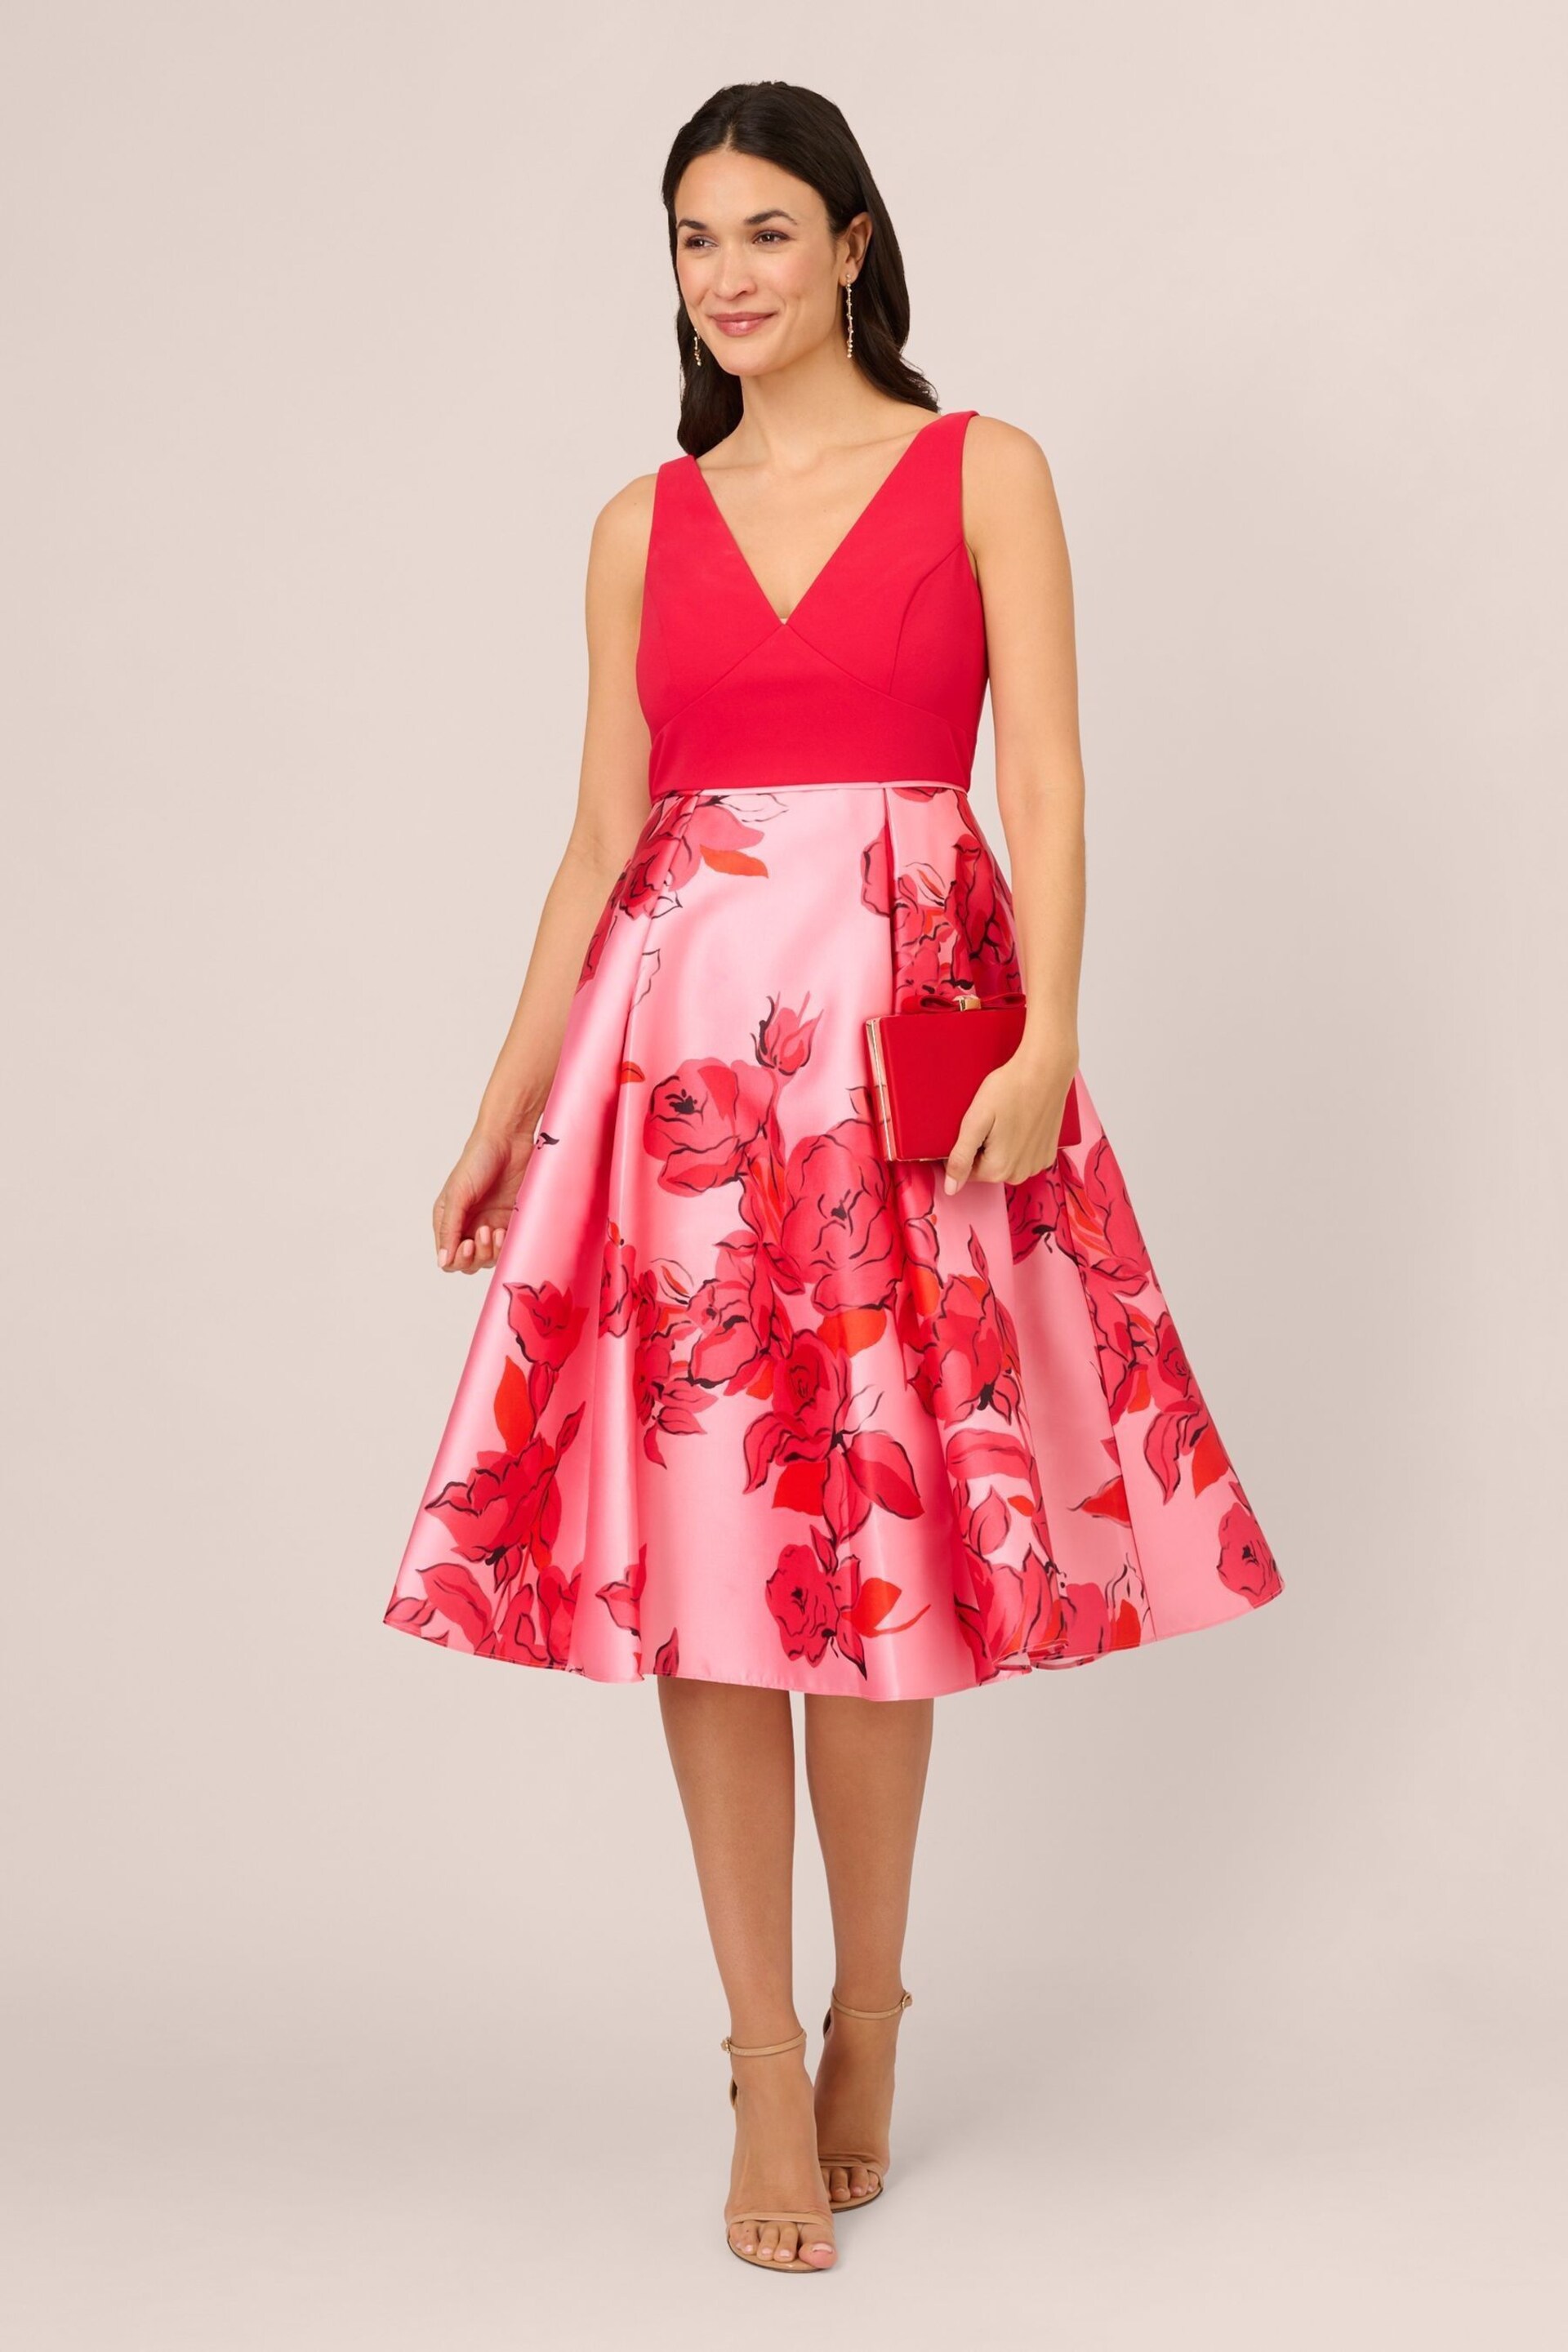 Adrianna Papell Pink Printed Midi Dress - Image 3 of 7